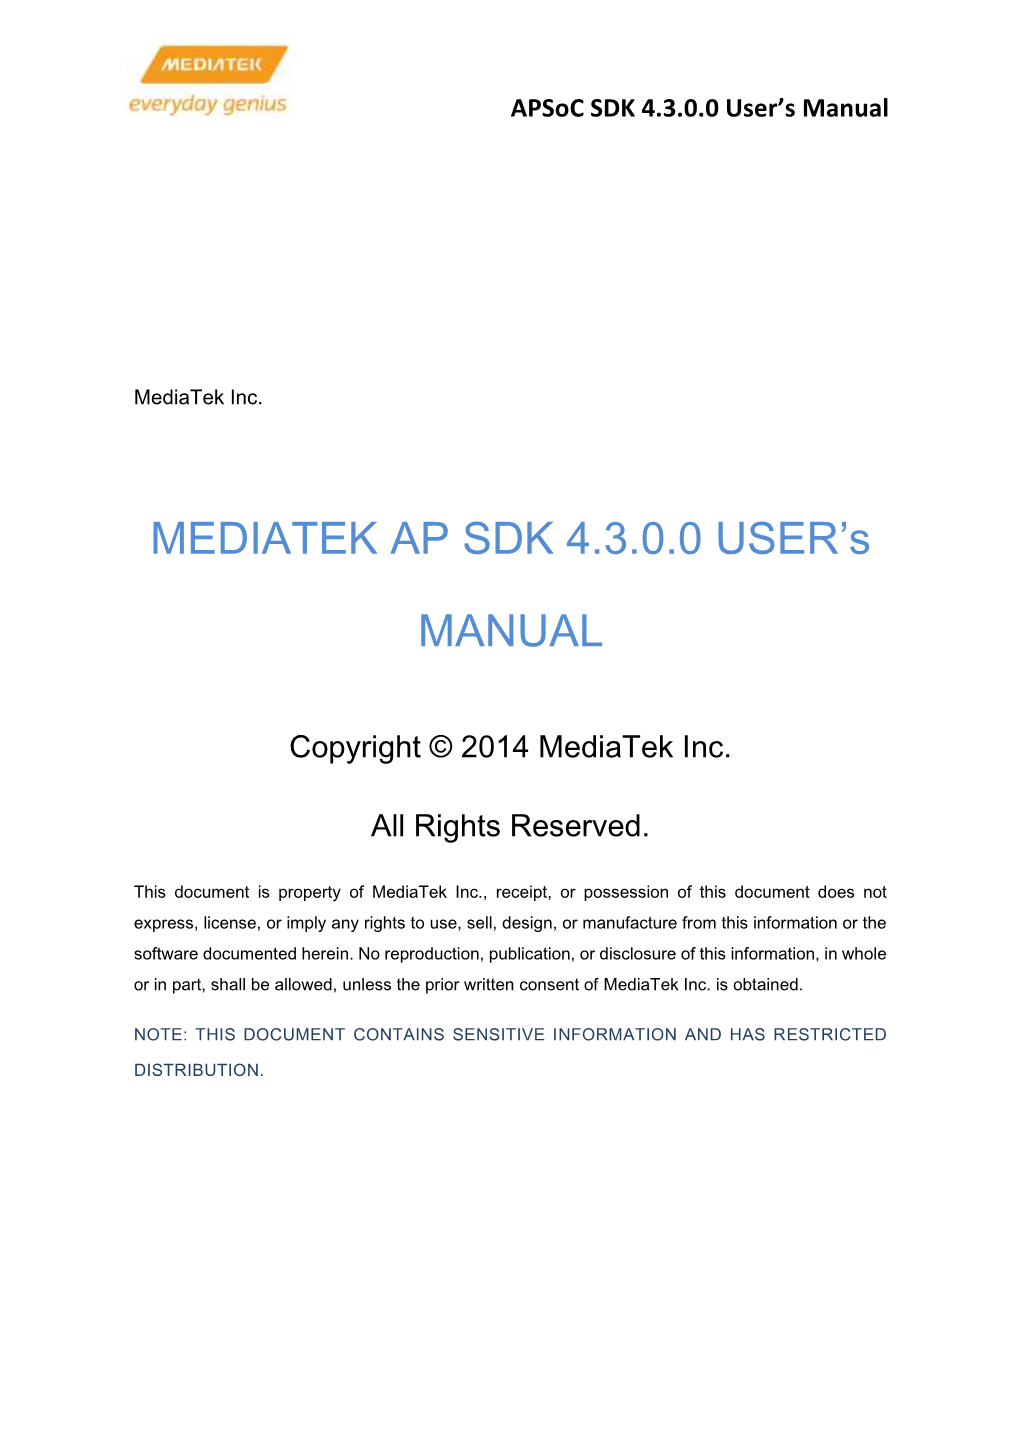 MEDIATEK AP SDK 4.3.0.0 USER's MANUAL